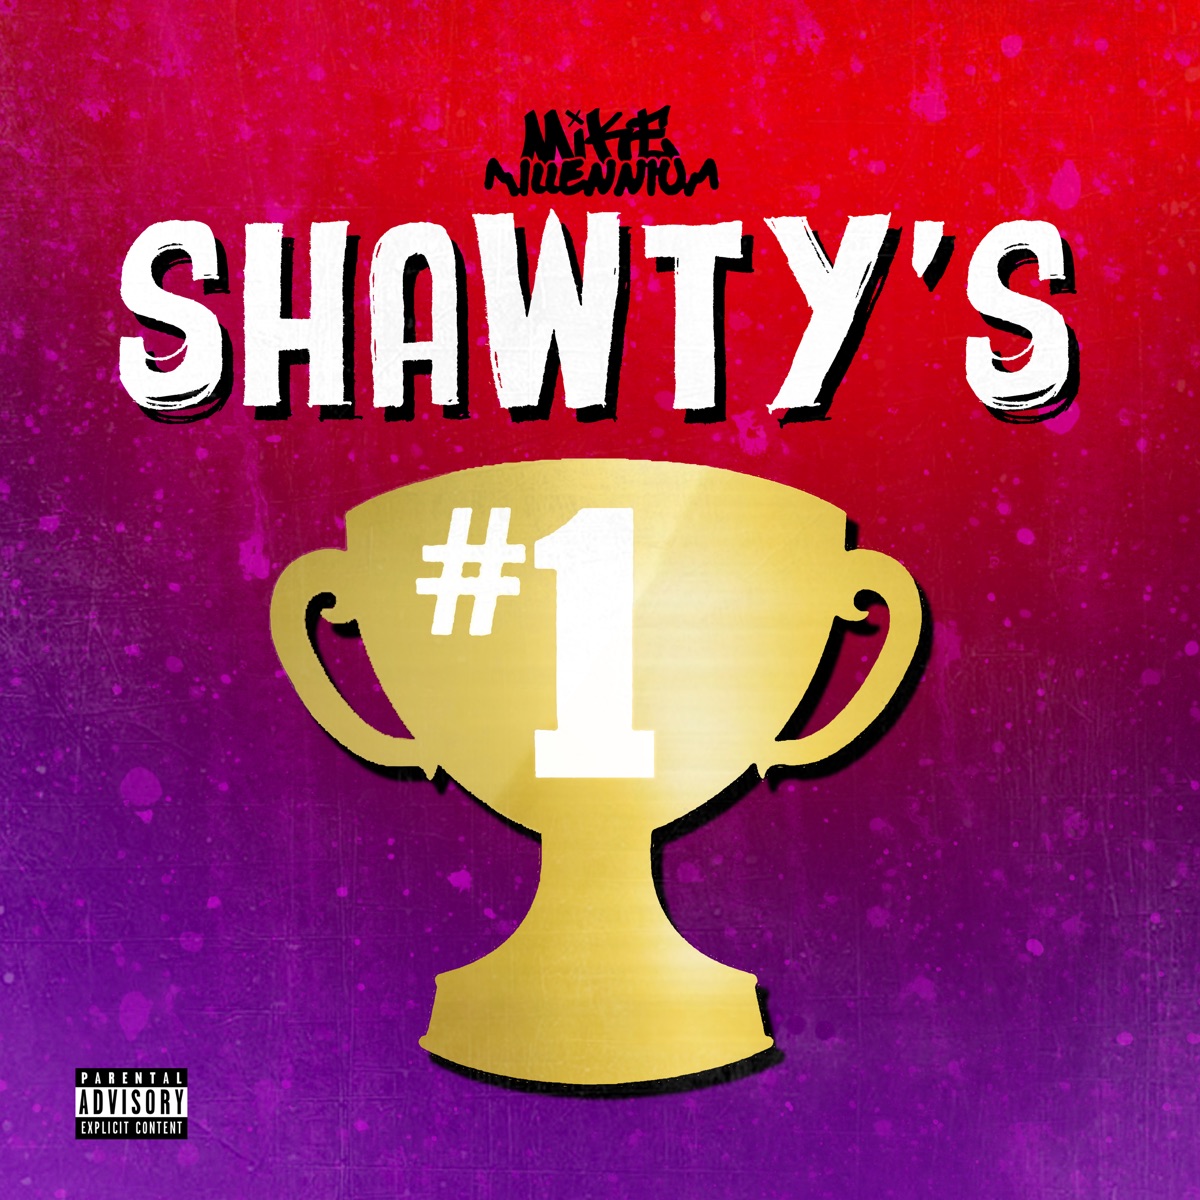 Shawty's #1 - Single - Album by Mike Millennium - Apple Music